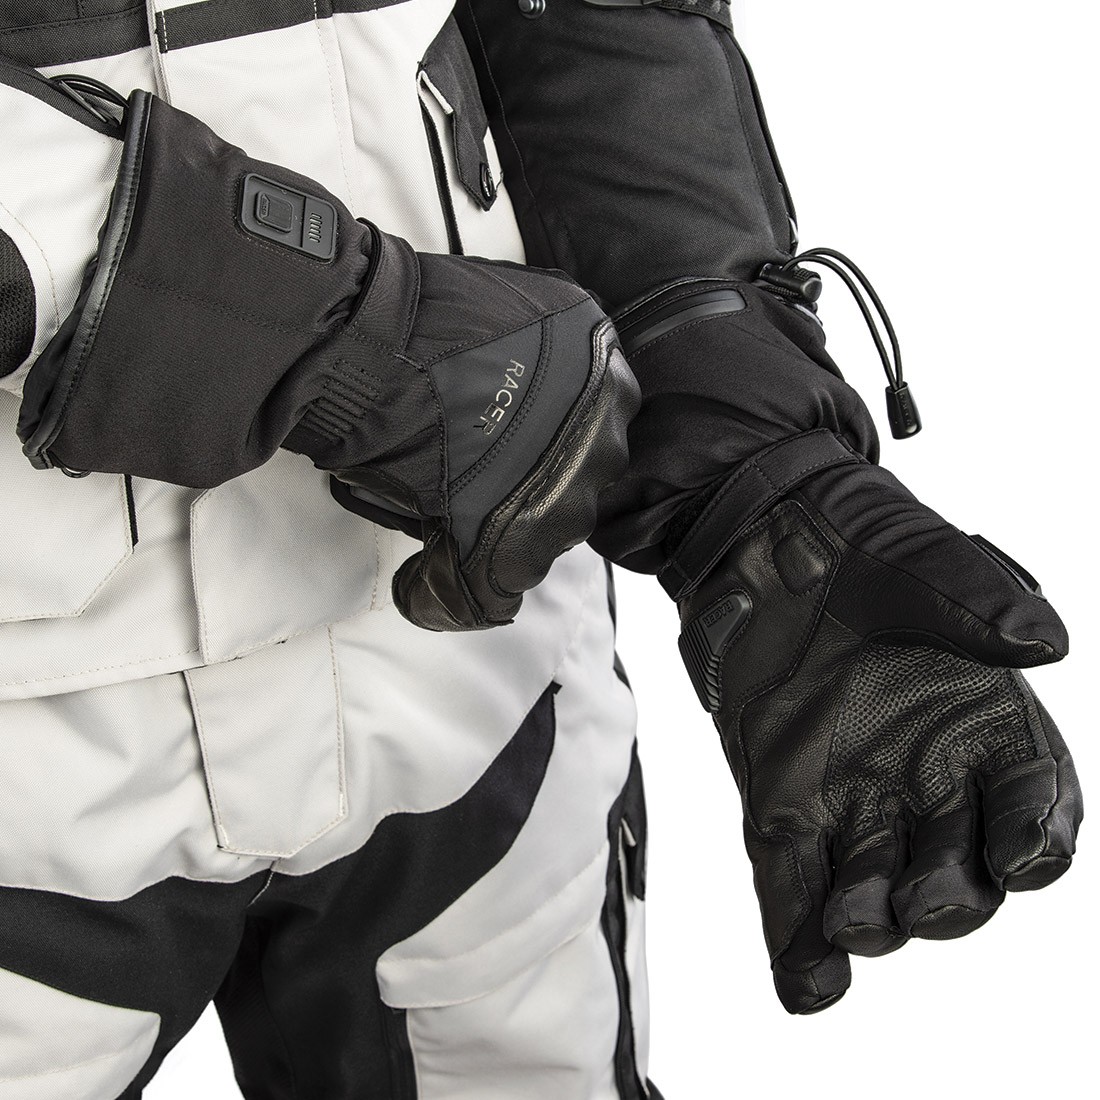 HEAT5 - Heated motorcycle gloves